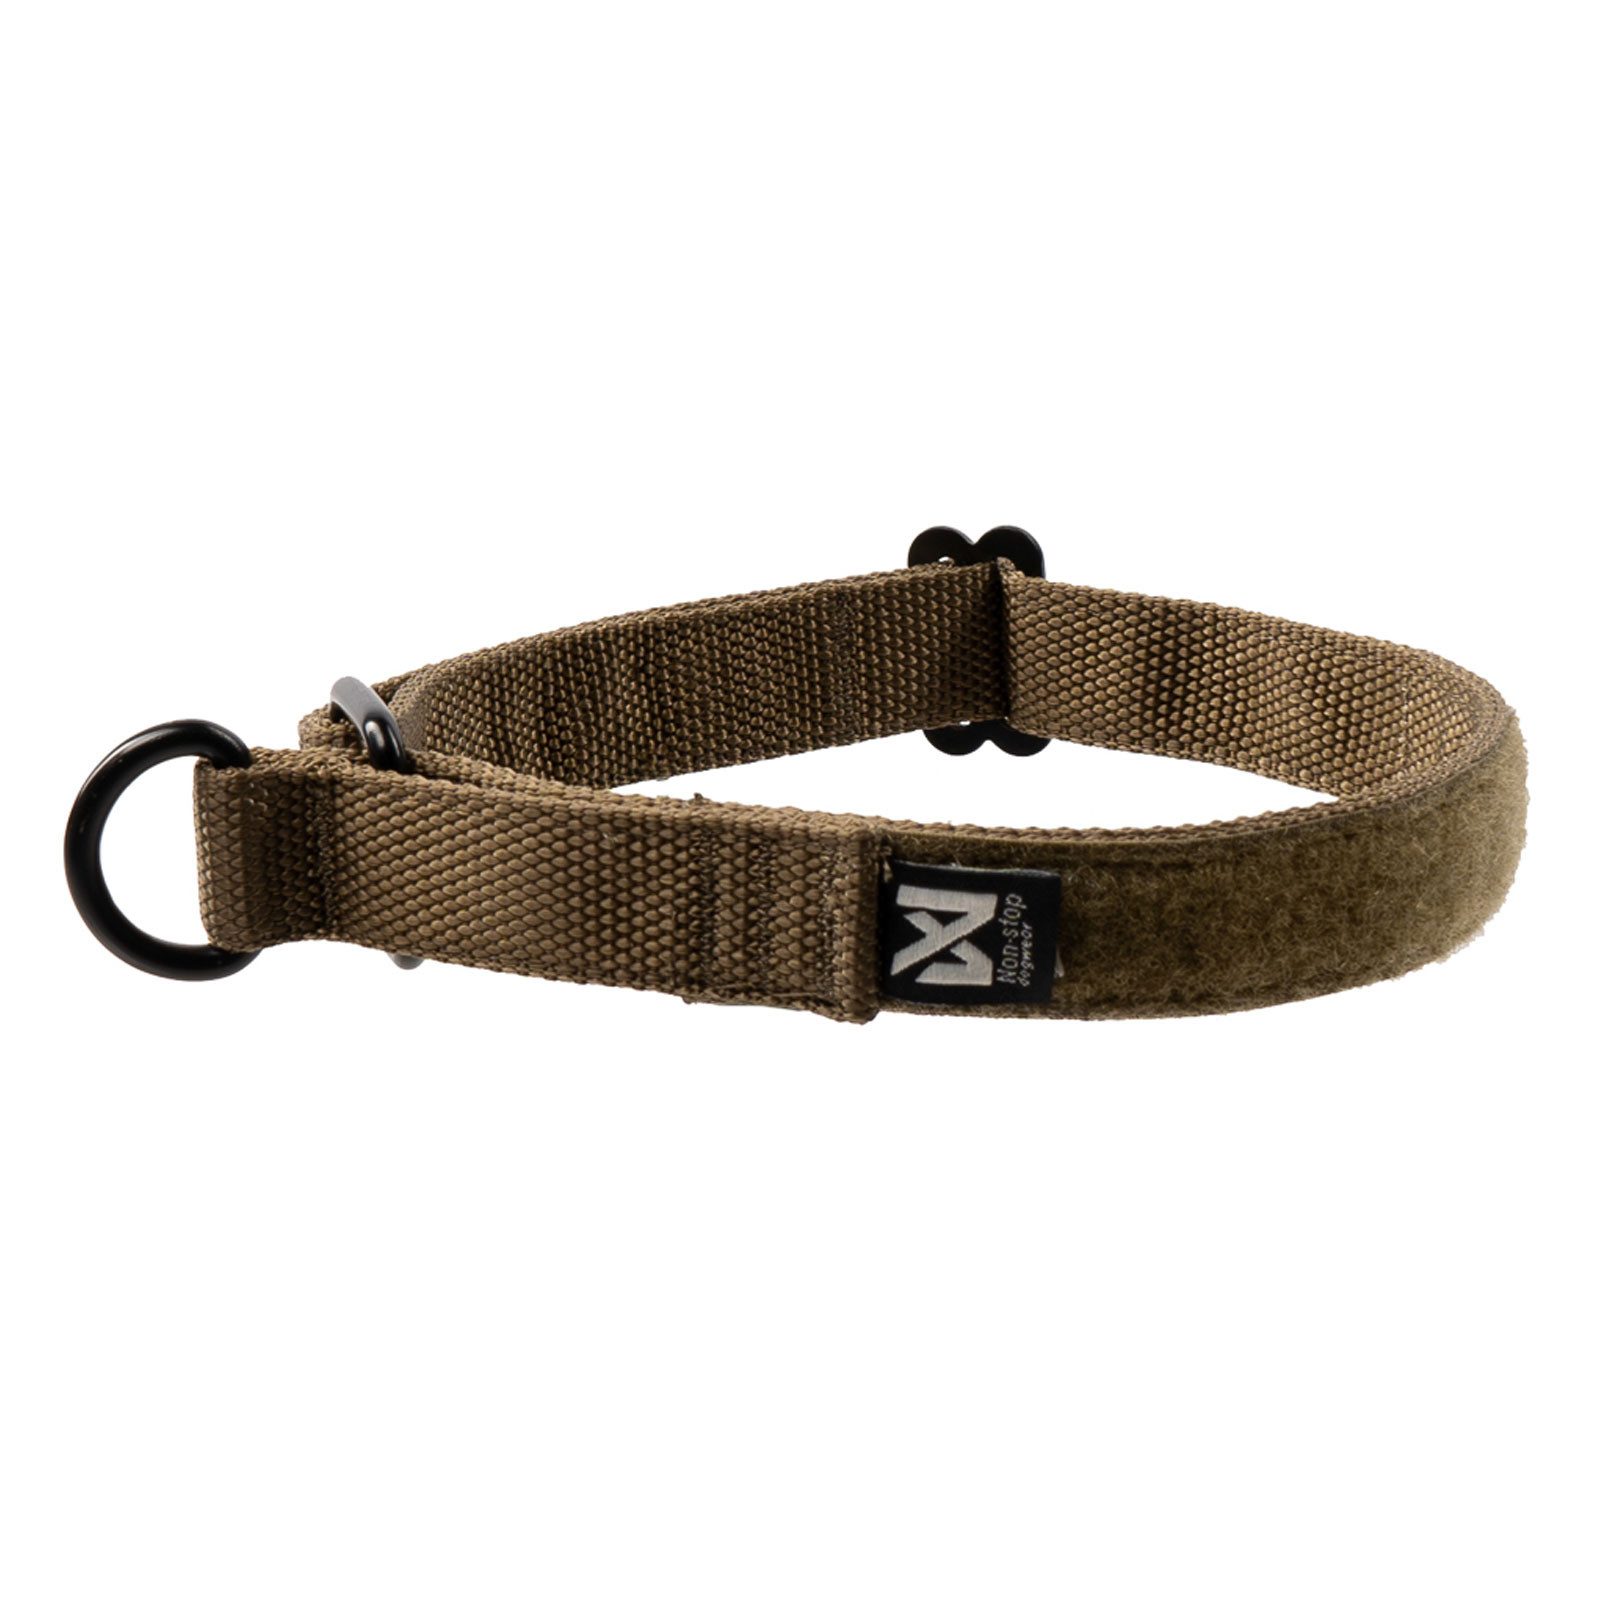 Non-stop dogwear Hunde-Halsband Solid adjustable collar WD olive, Nylon, Die Working Dog Serie - für Mallocher-Hunde!